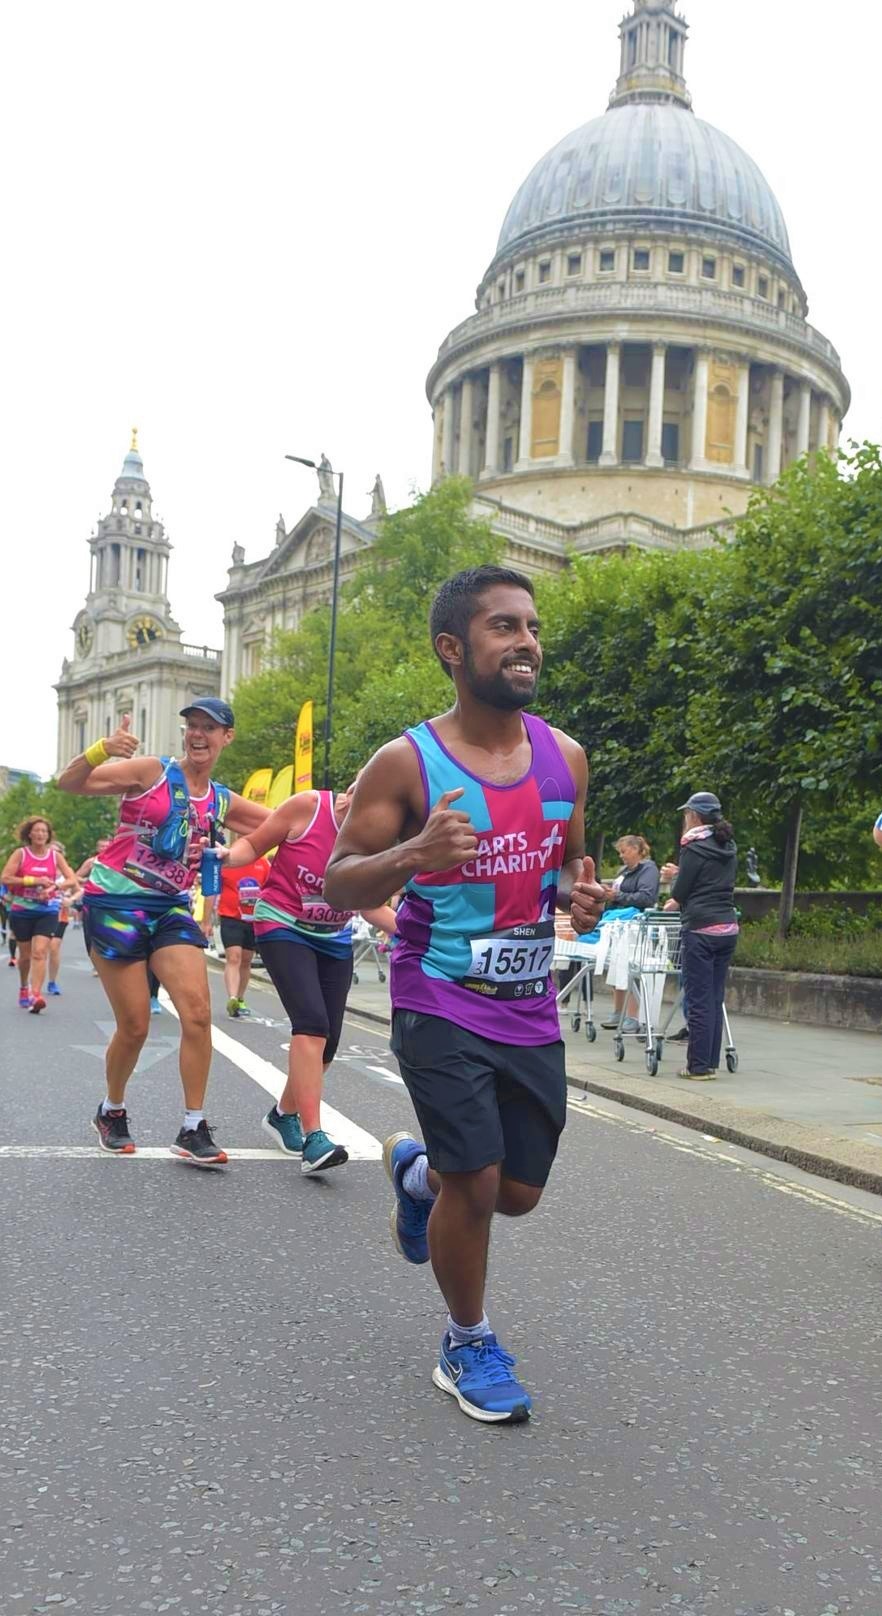 Barts Charity Runner at London Landmarks Half Marathon